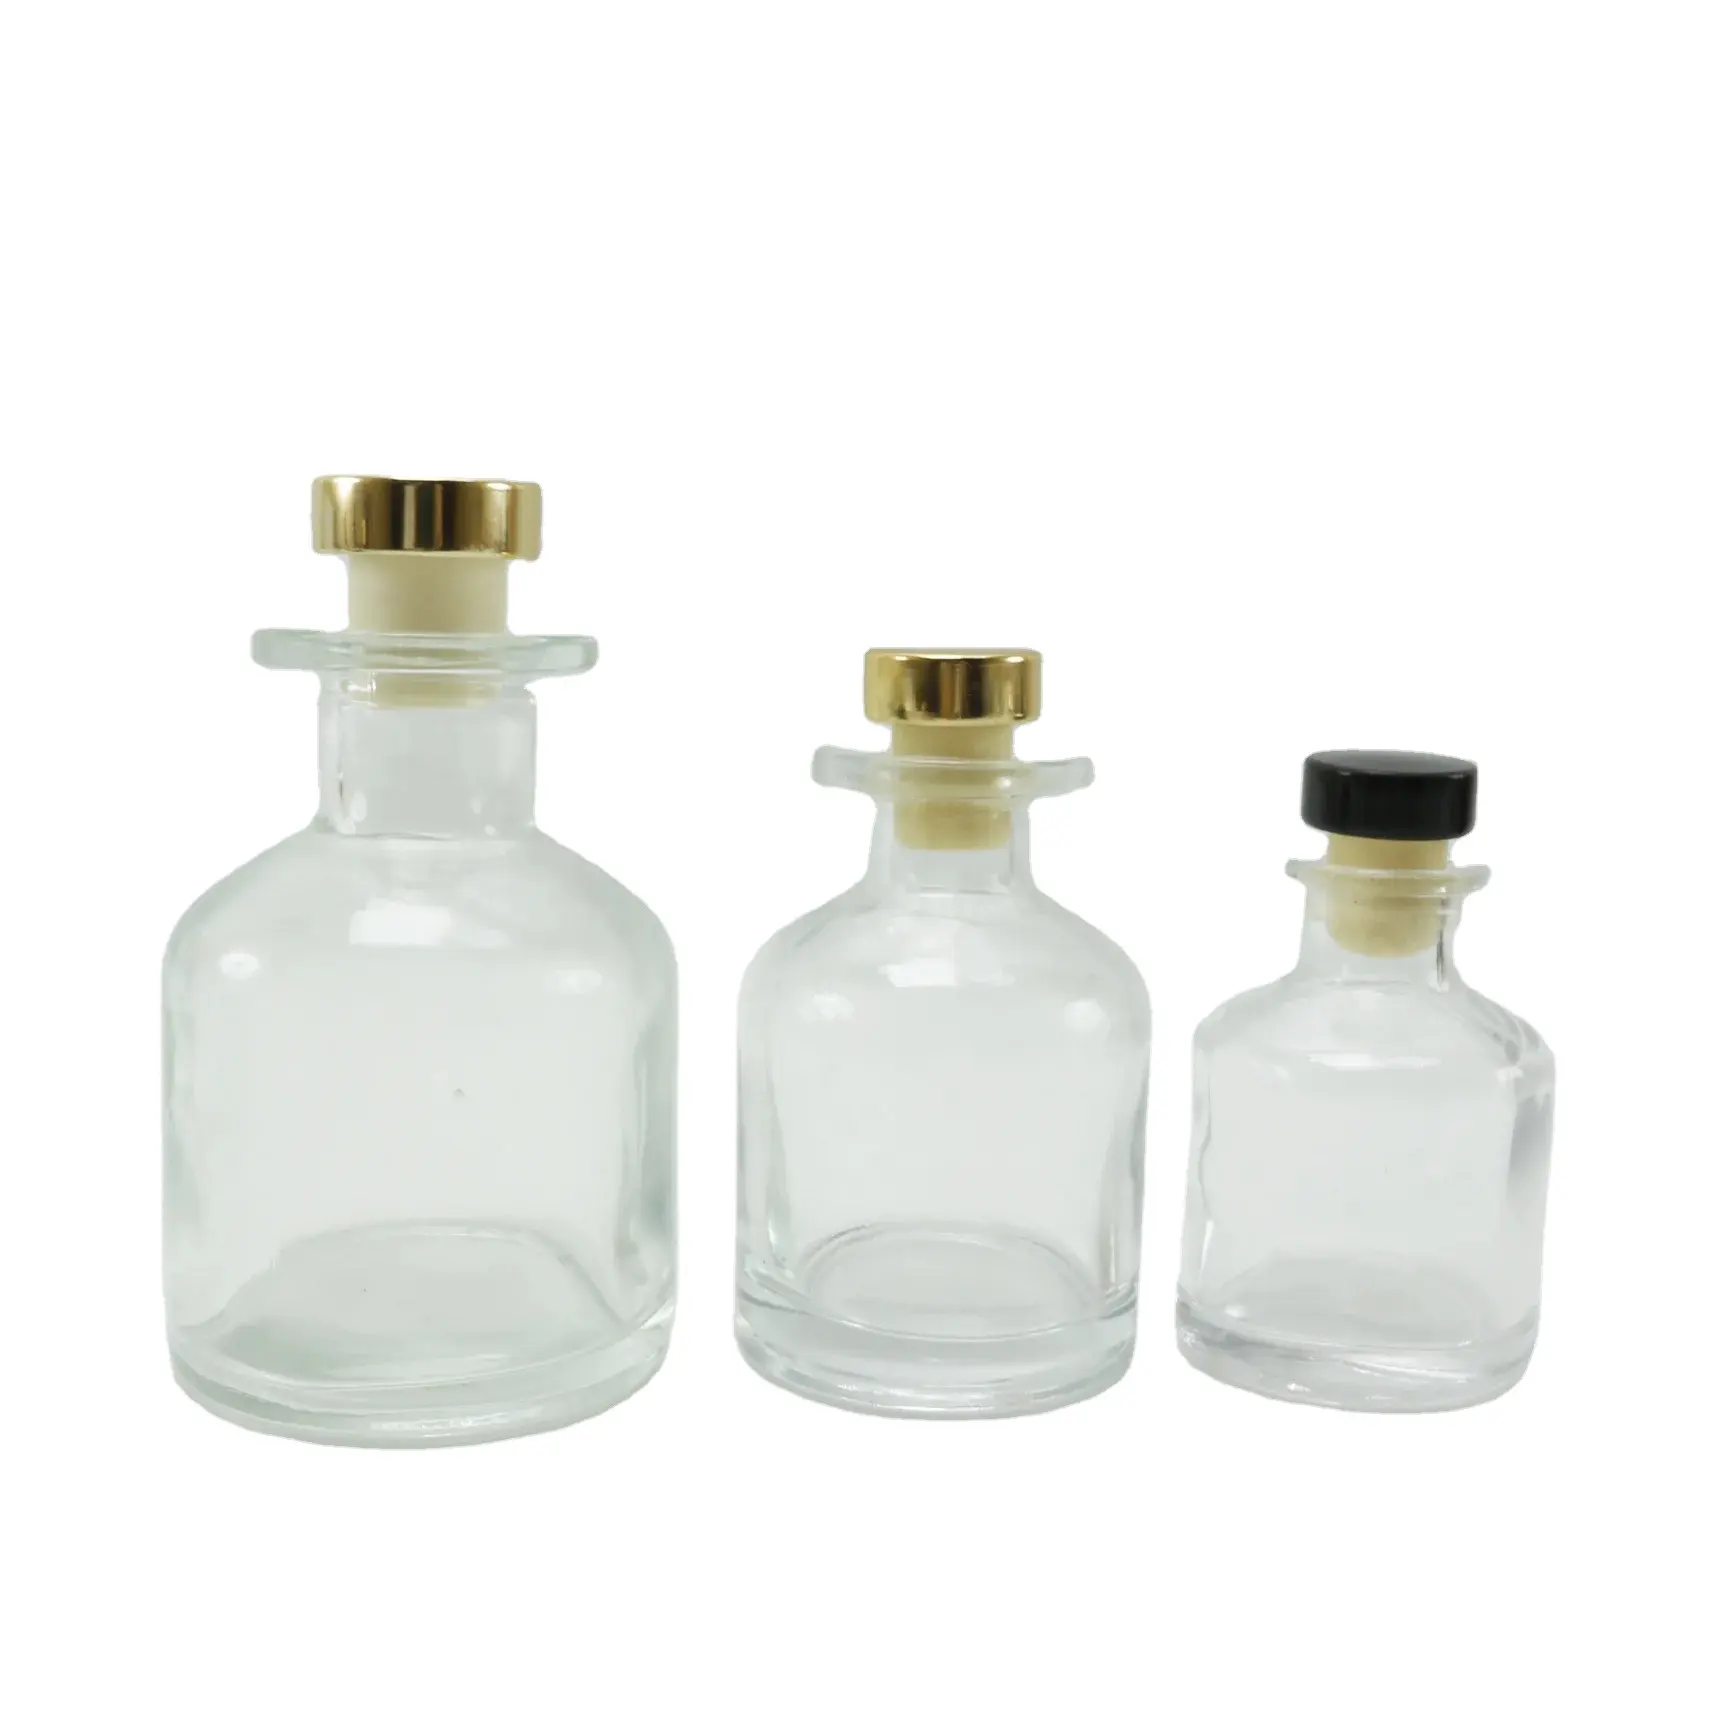 Haute qualité 50ml 100ml 150ml 200ml bouteille en verre ronde grand Air Reed diffuseur bouteilles d'huile aroma-A24